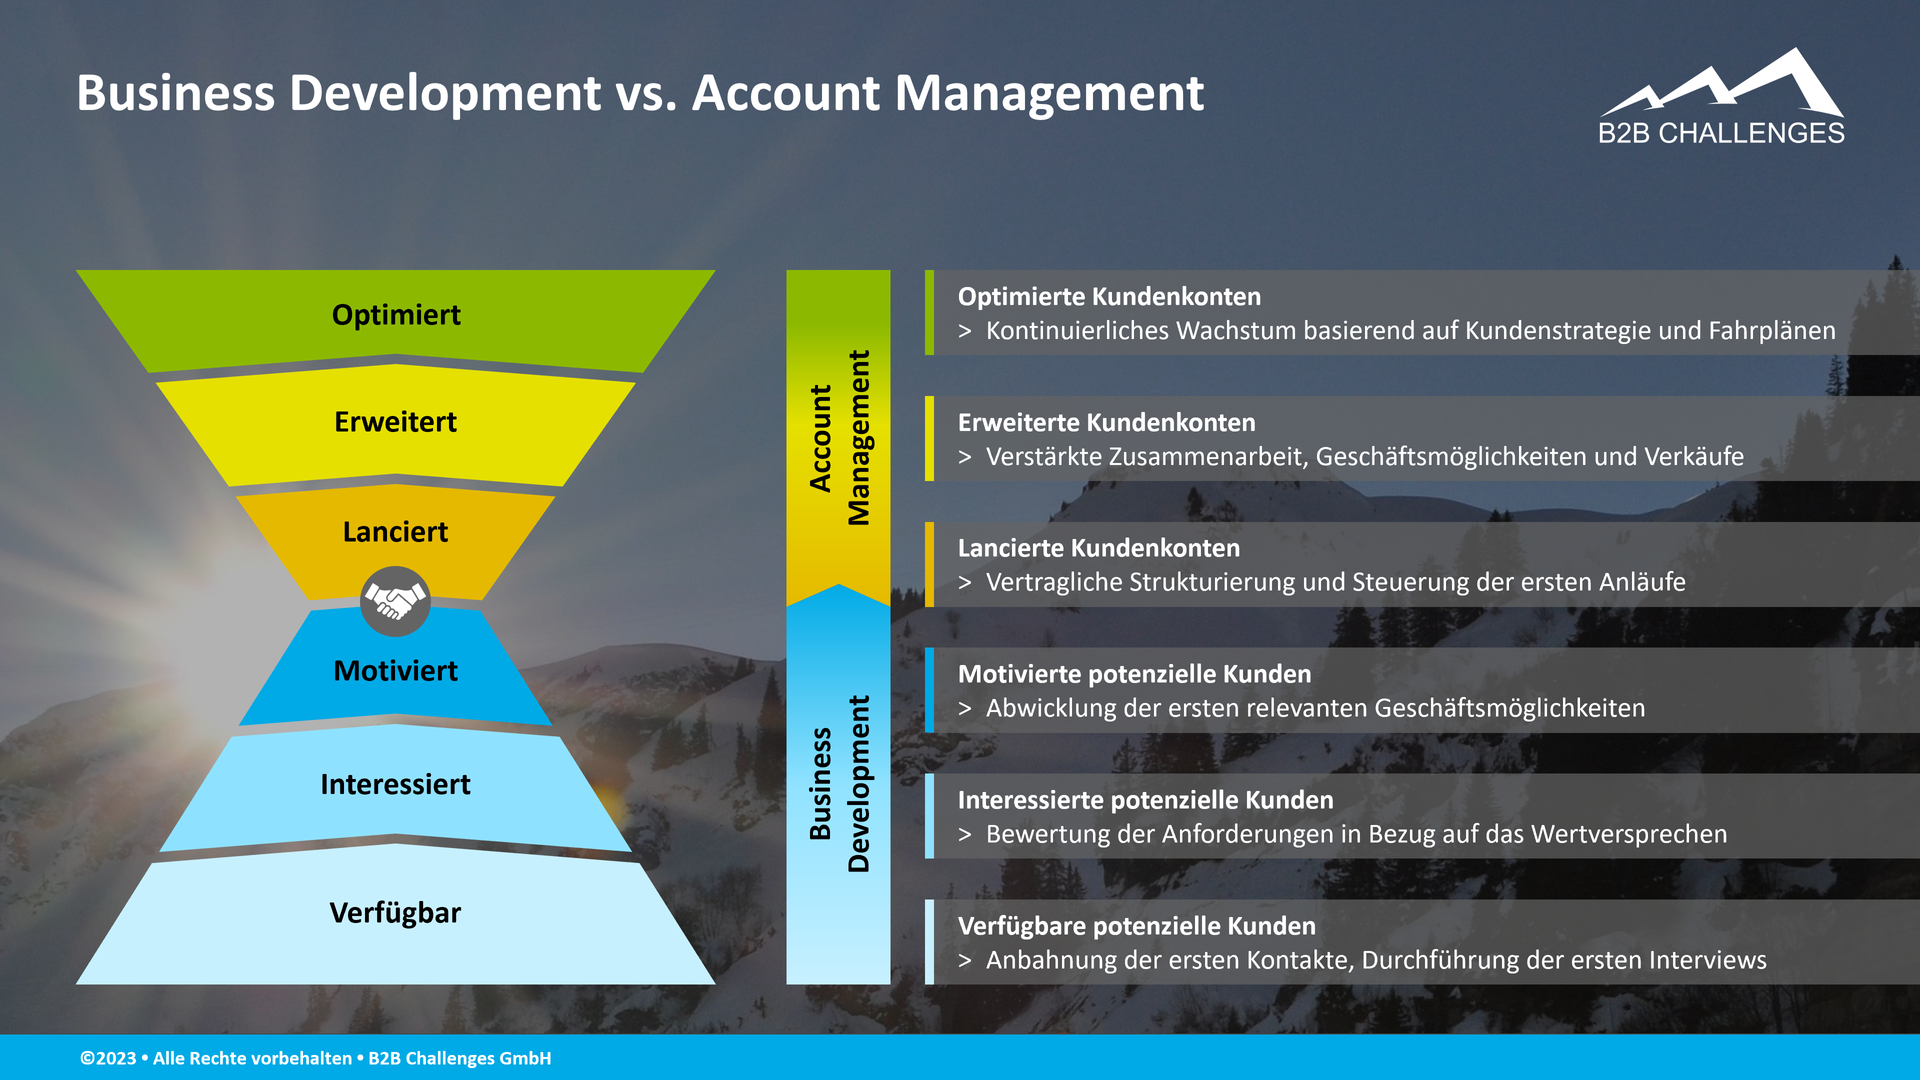 Business Development vs. Account Management (Serge Megazzini - B2B Challenges GmbH)